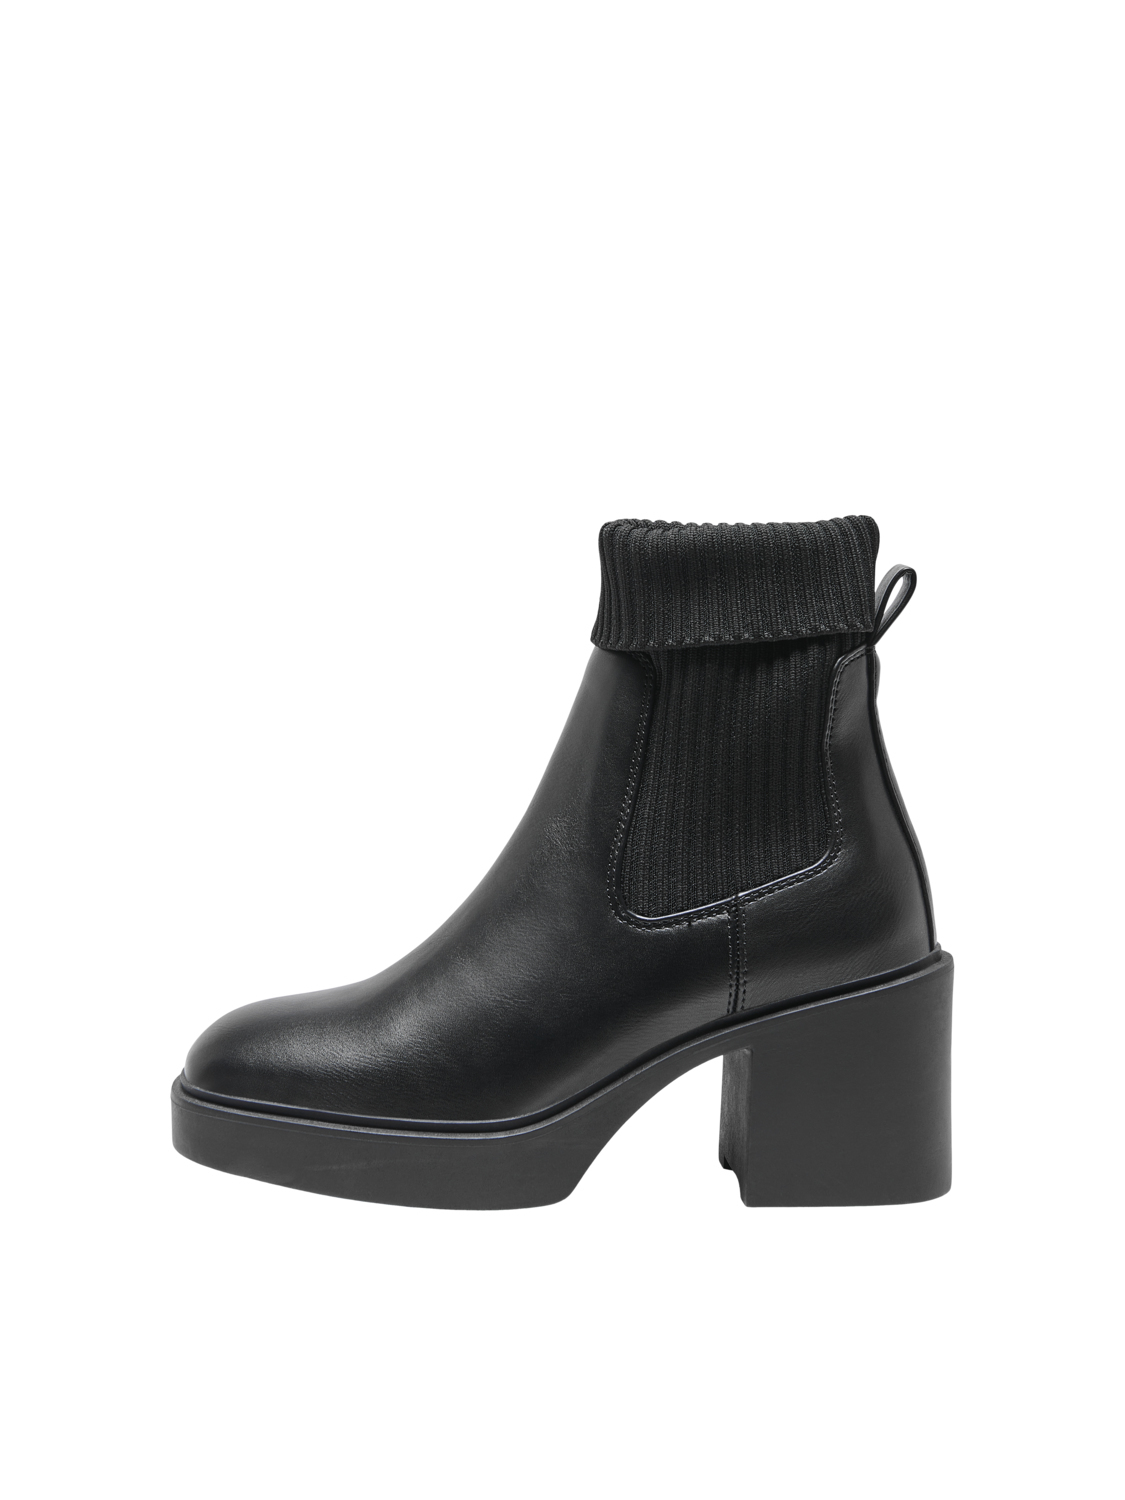 Bianca block heel faux leather boots, BLACK, large